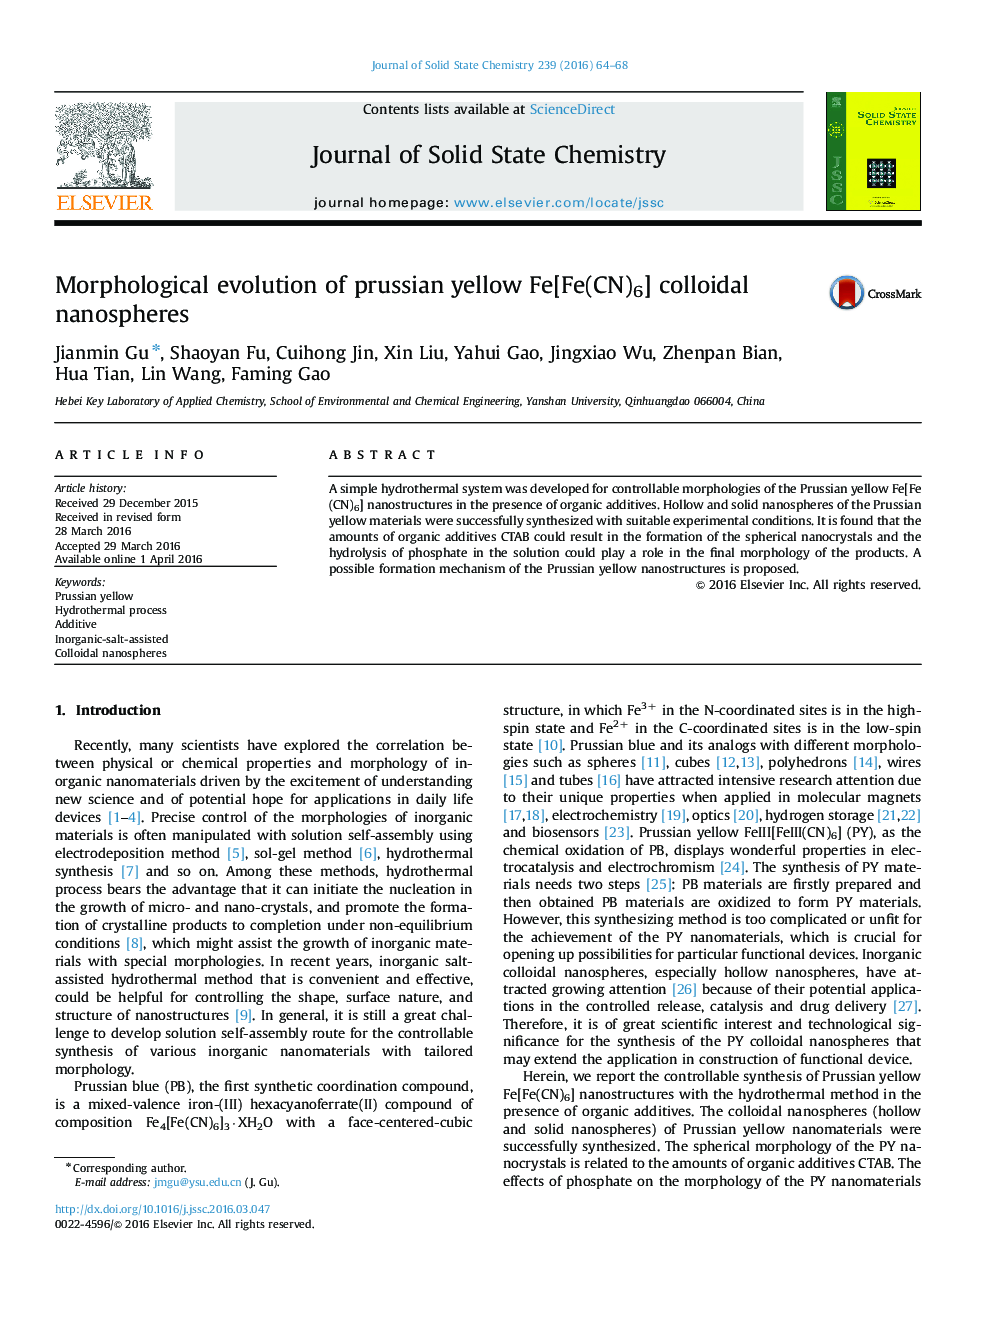 Morphological evolution of prussian yellow Fe[Fe(CN)6] colloidal nanospheres